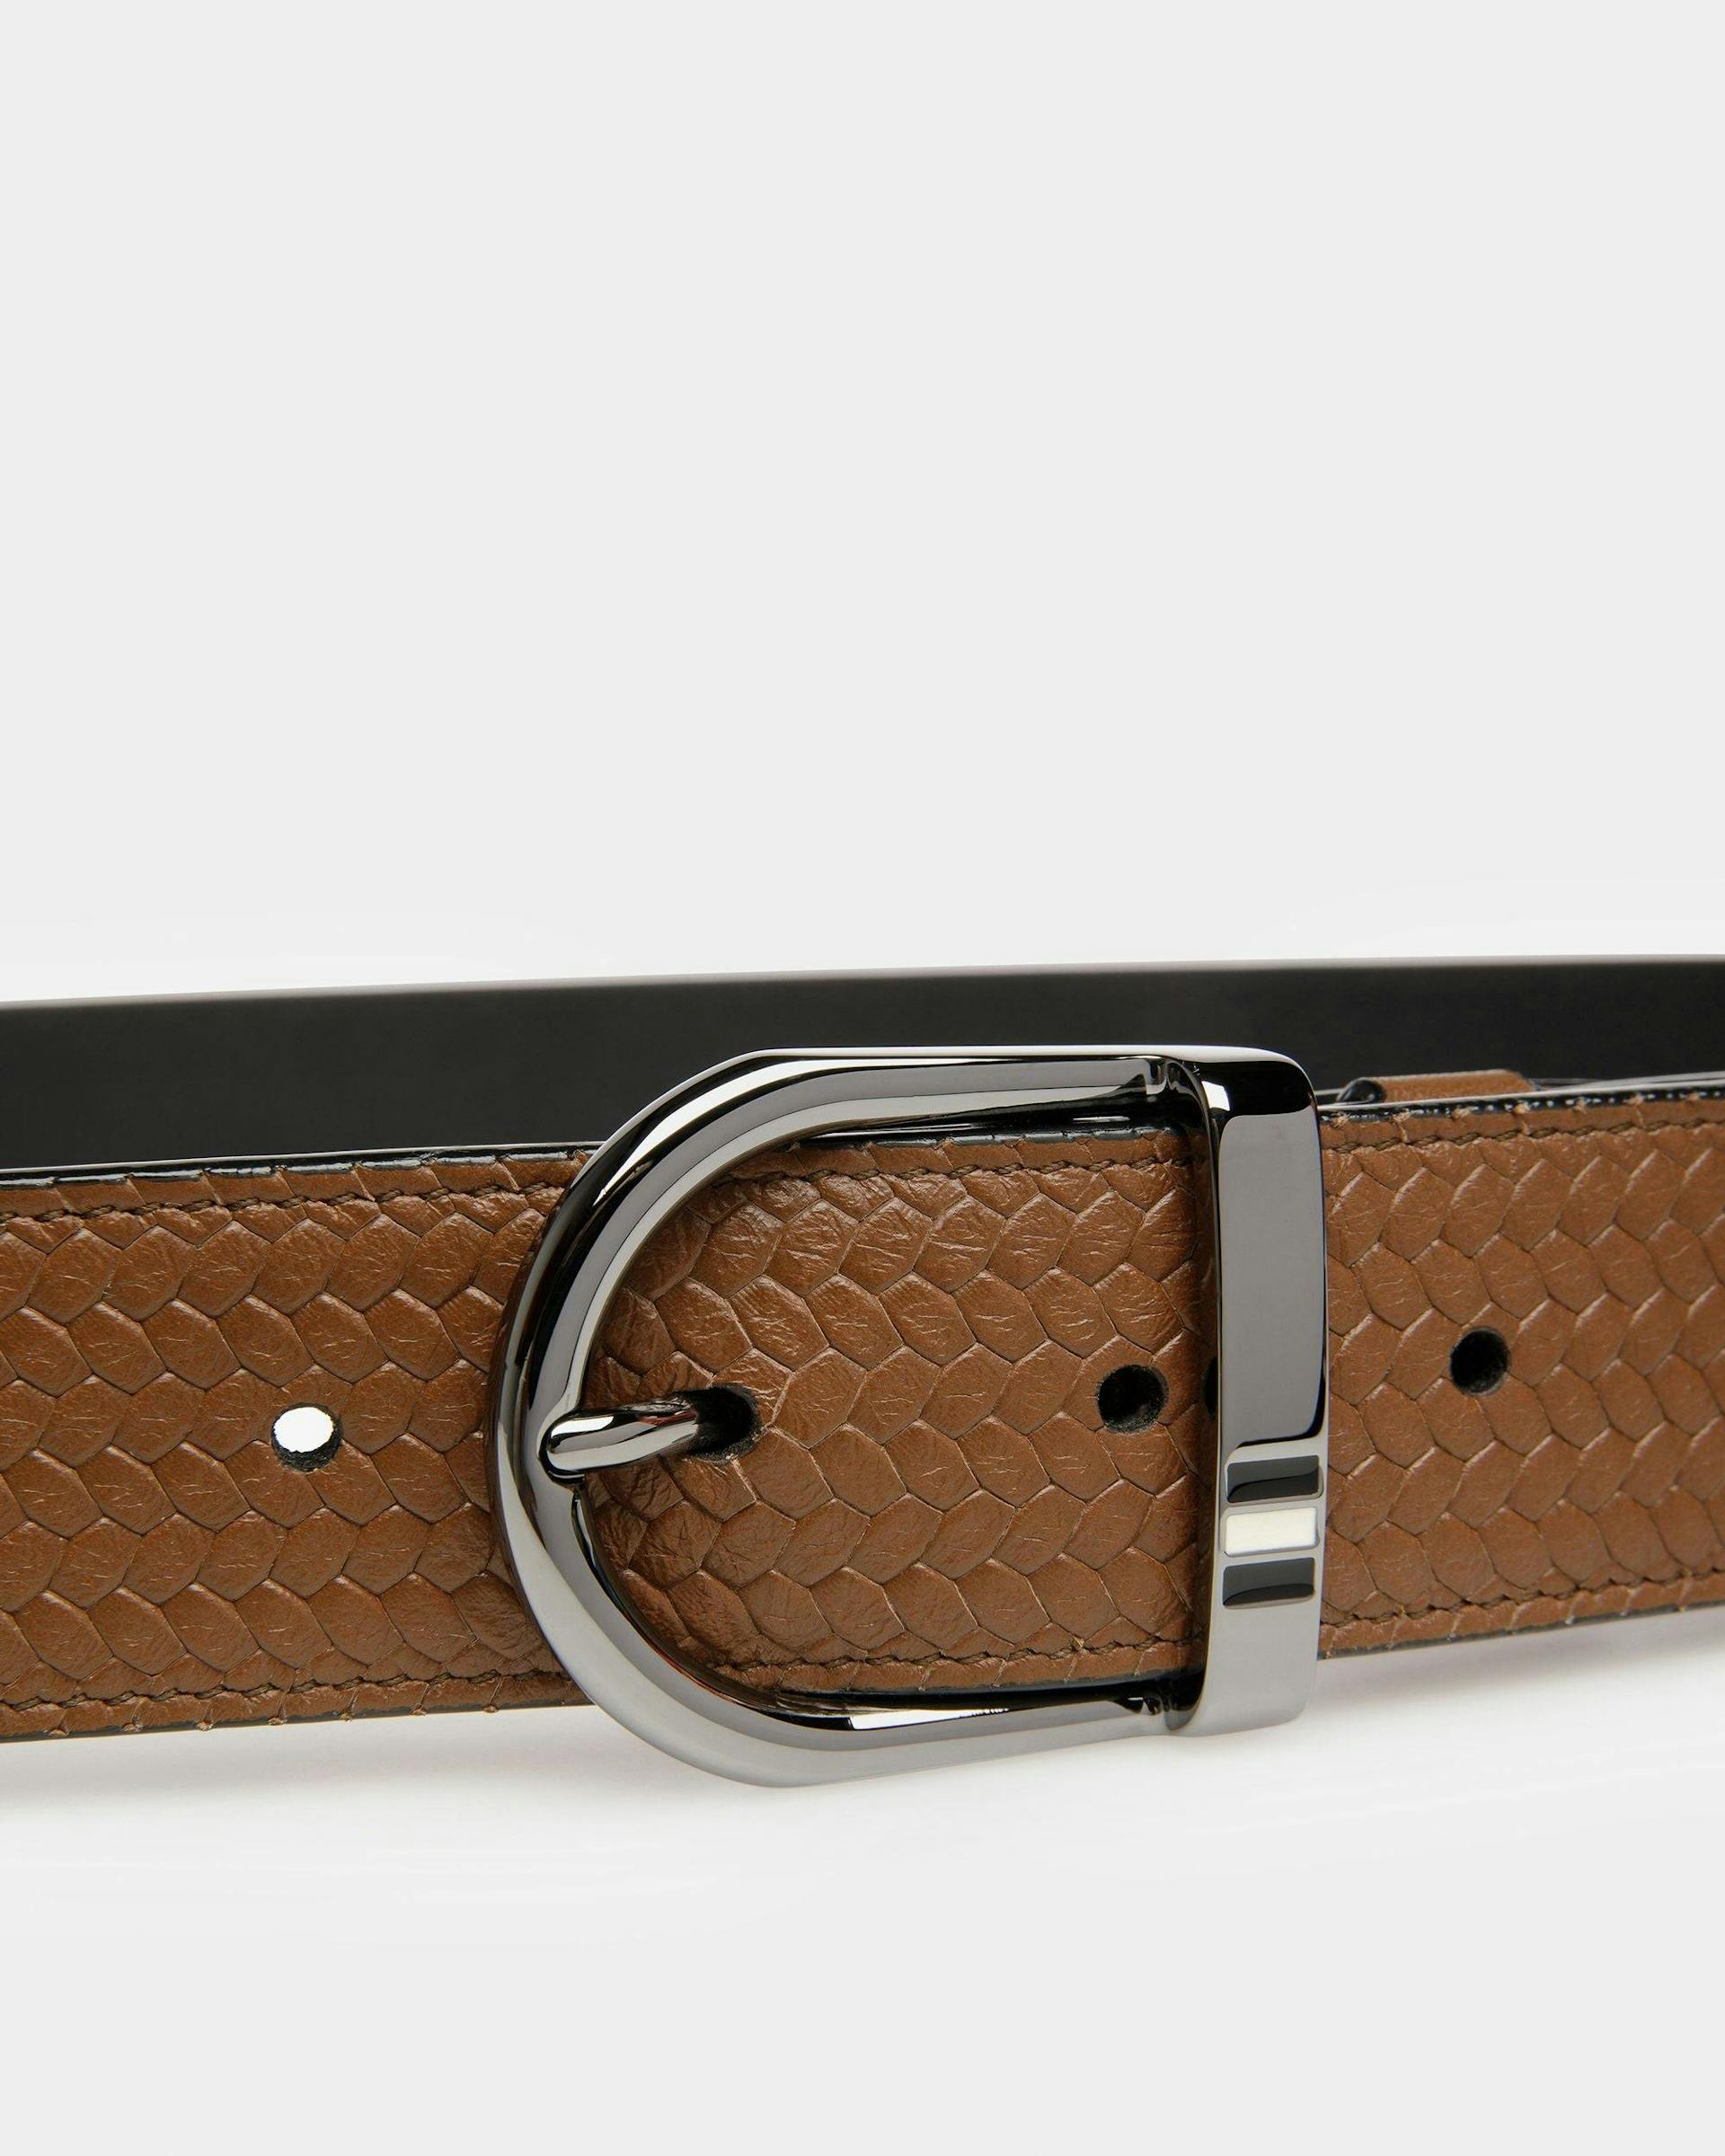 Darkon Leather Belt In Brown And Black - Men's - Bally - 03